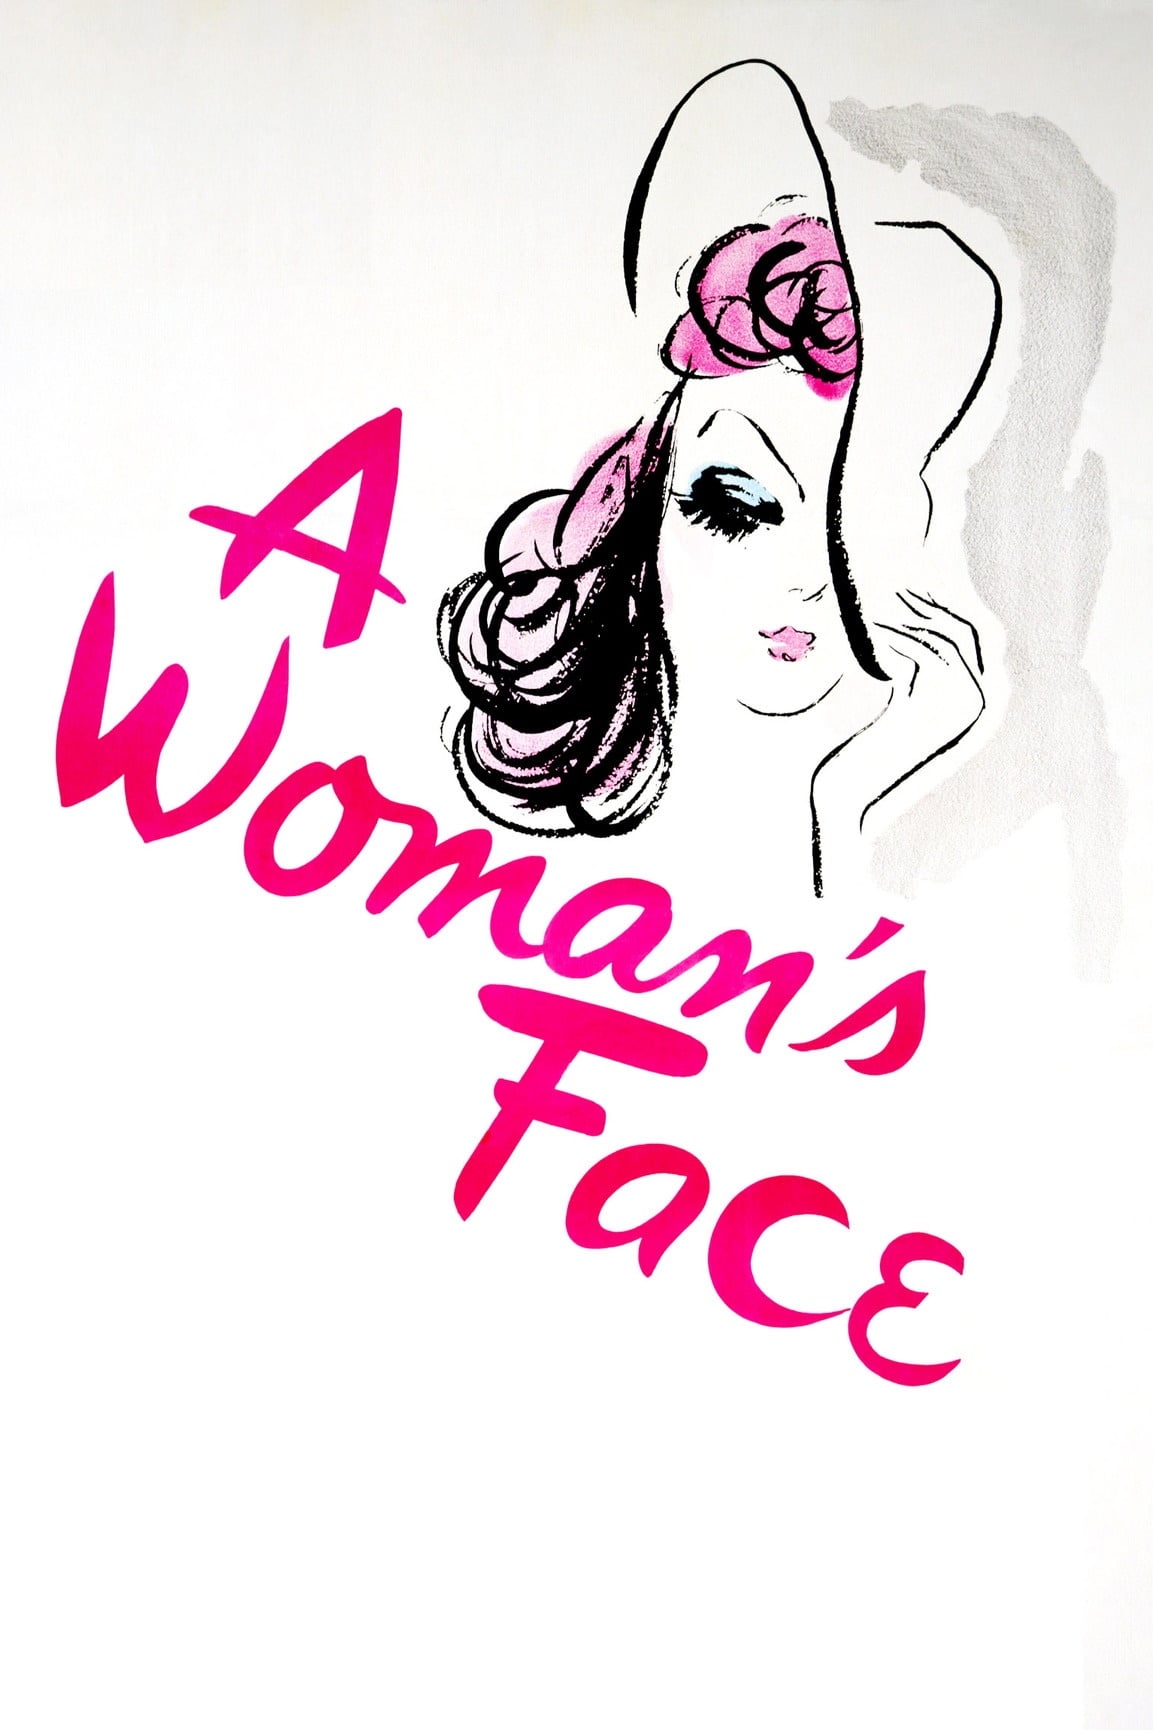 A Woman's Face - A Woman's Face